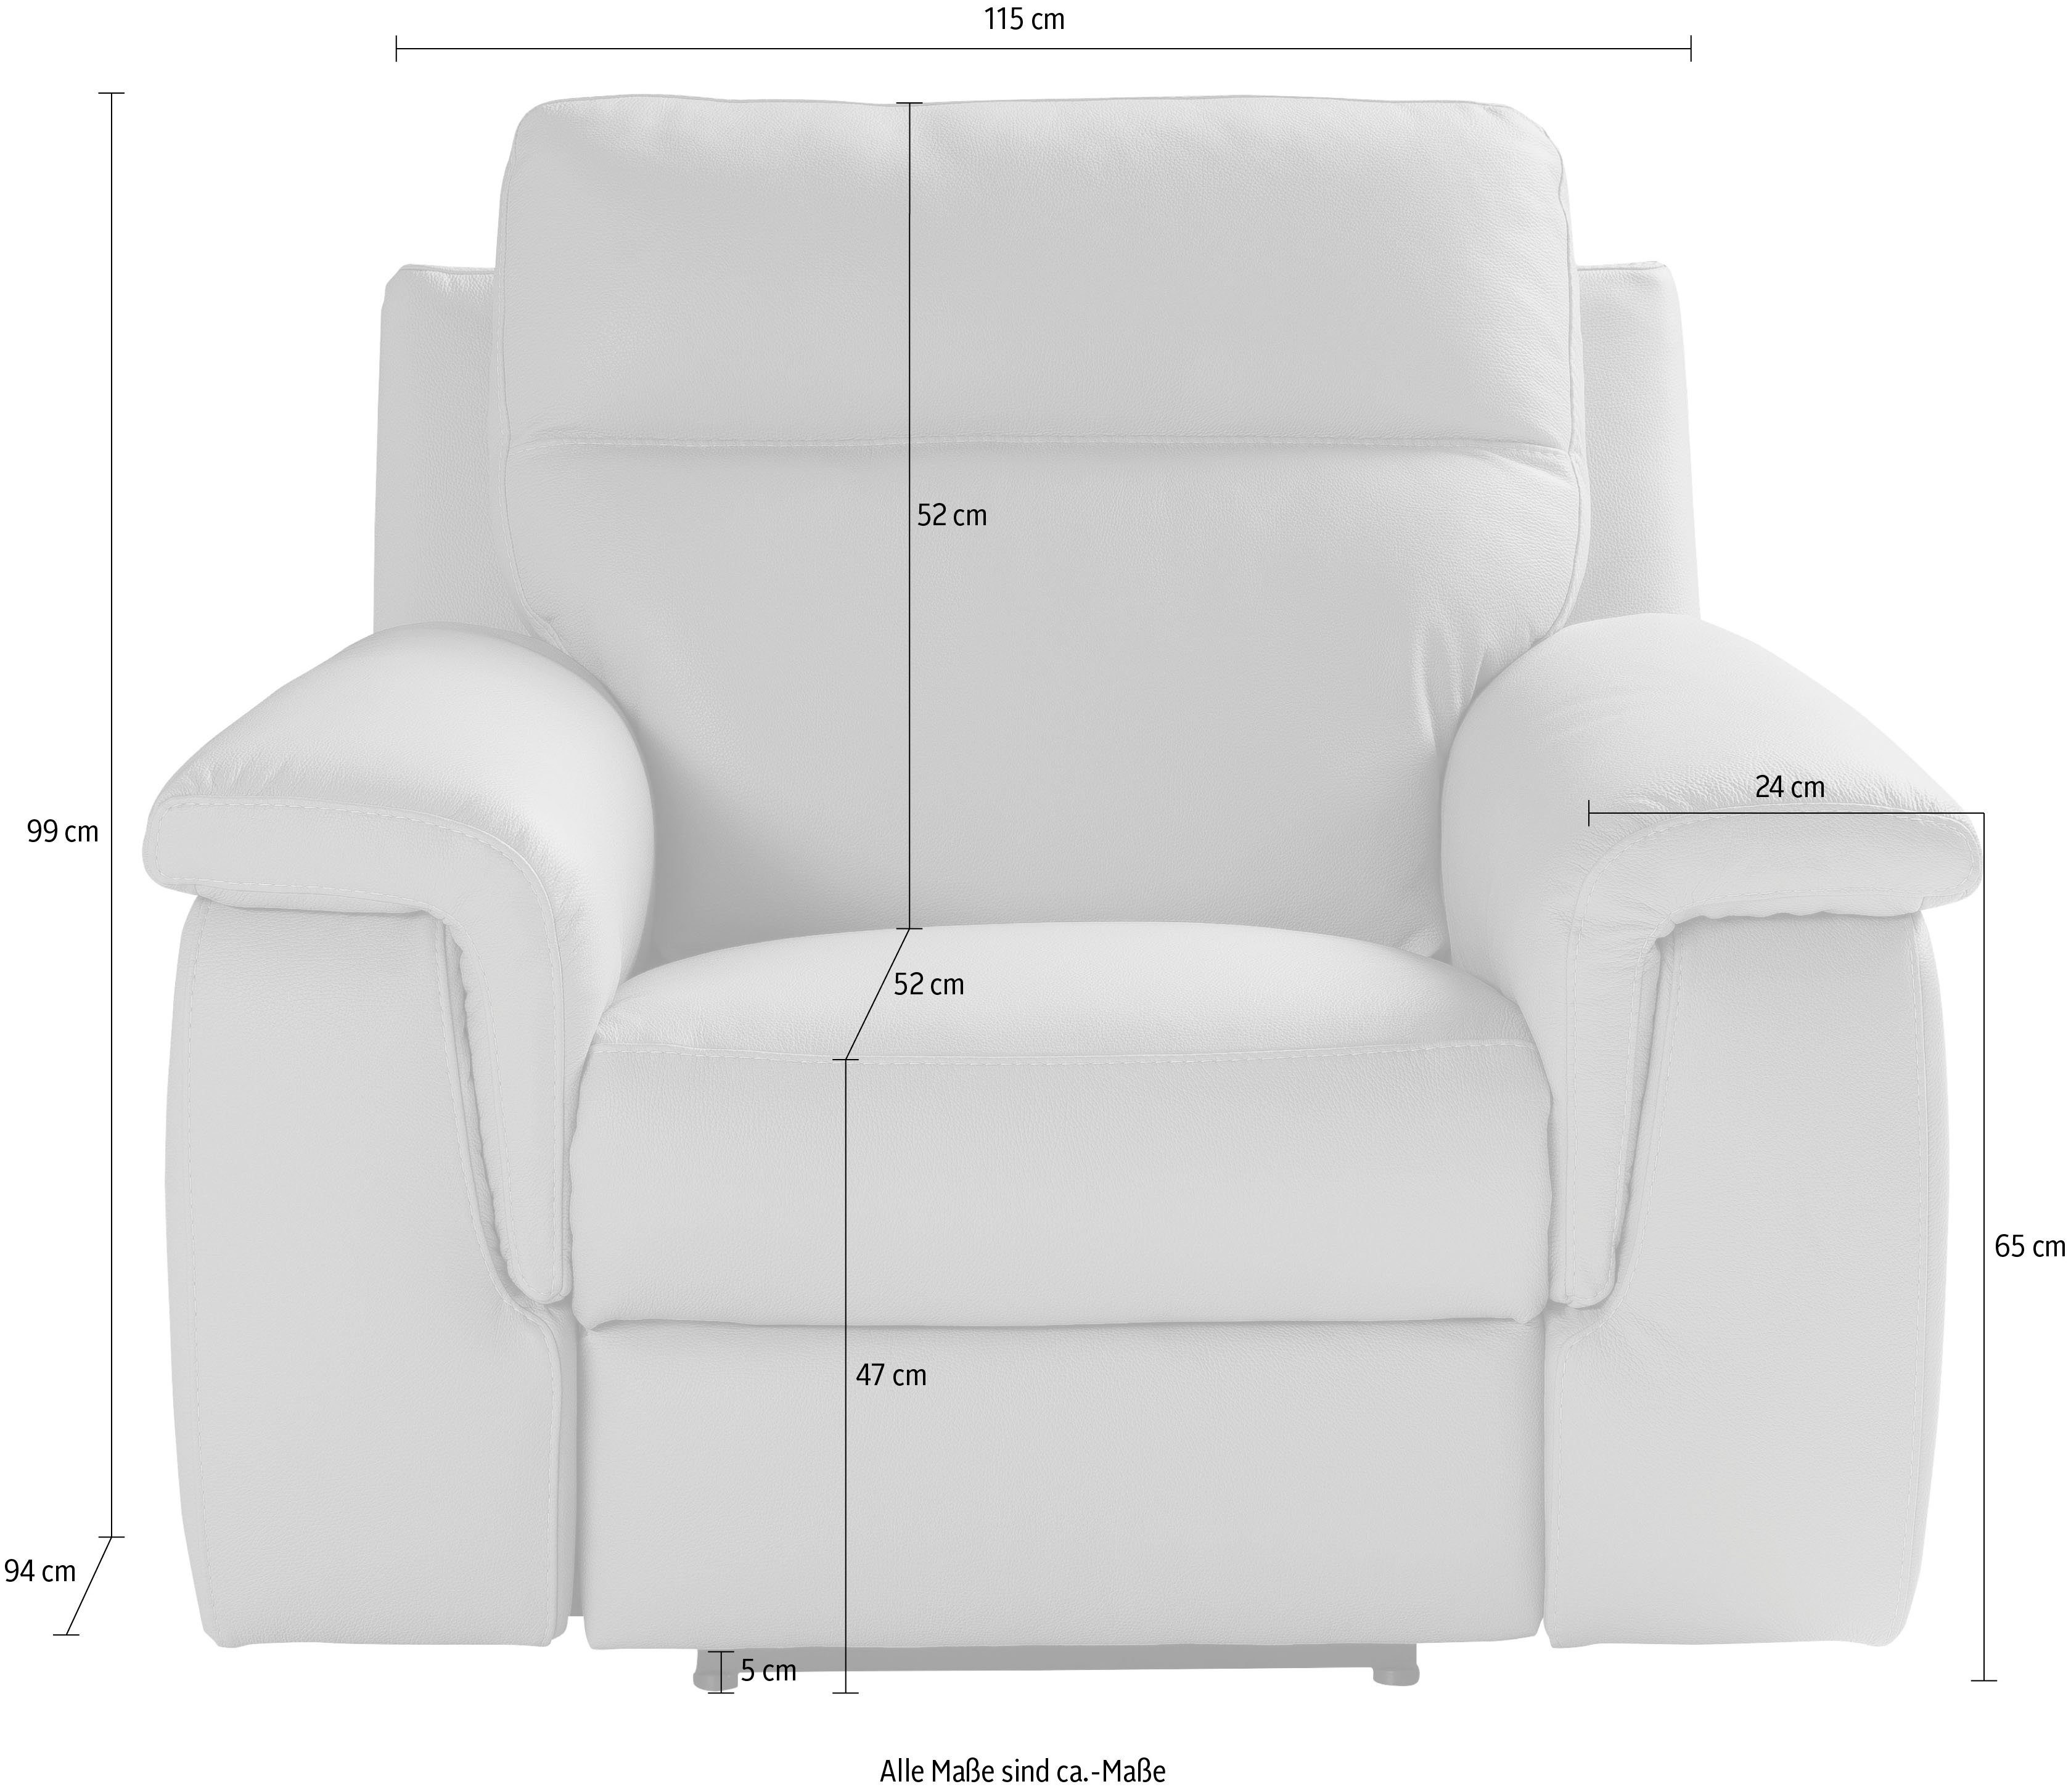 Sessel Breite inklusive 115 wahlweise mit cm Alan, Relaxfunktion, Home Fußstütze, Nicoletti